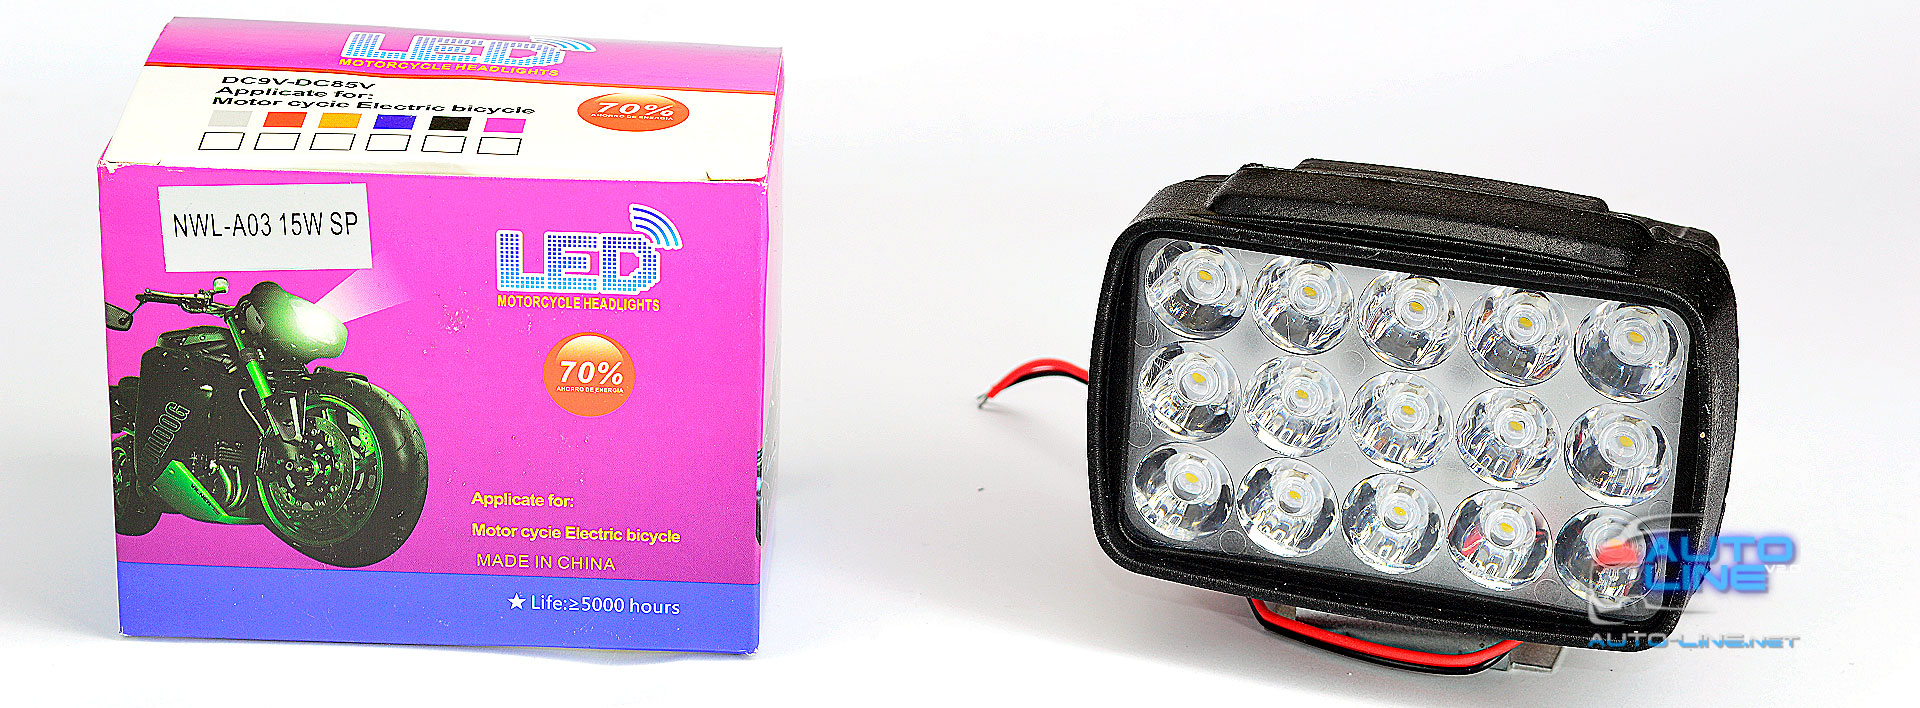 Nextone NWL-A03 15W SP — дешевая пластиковая дополнительная LED-фара дальнего света